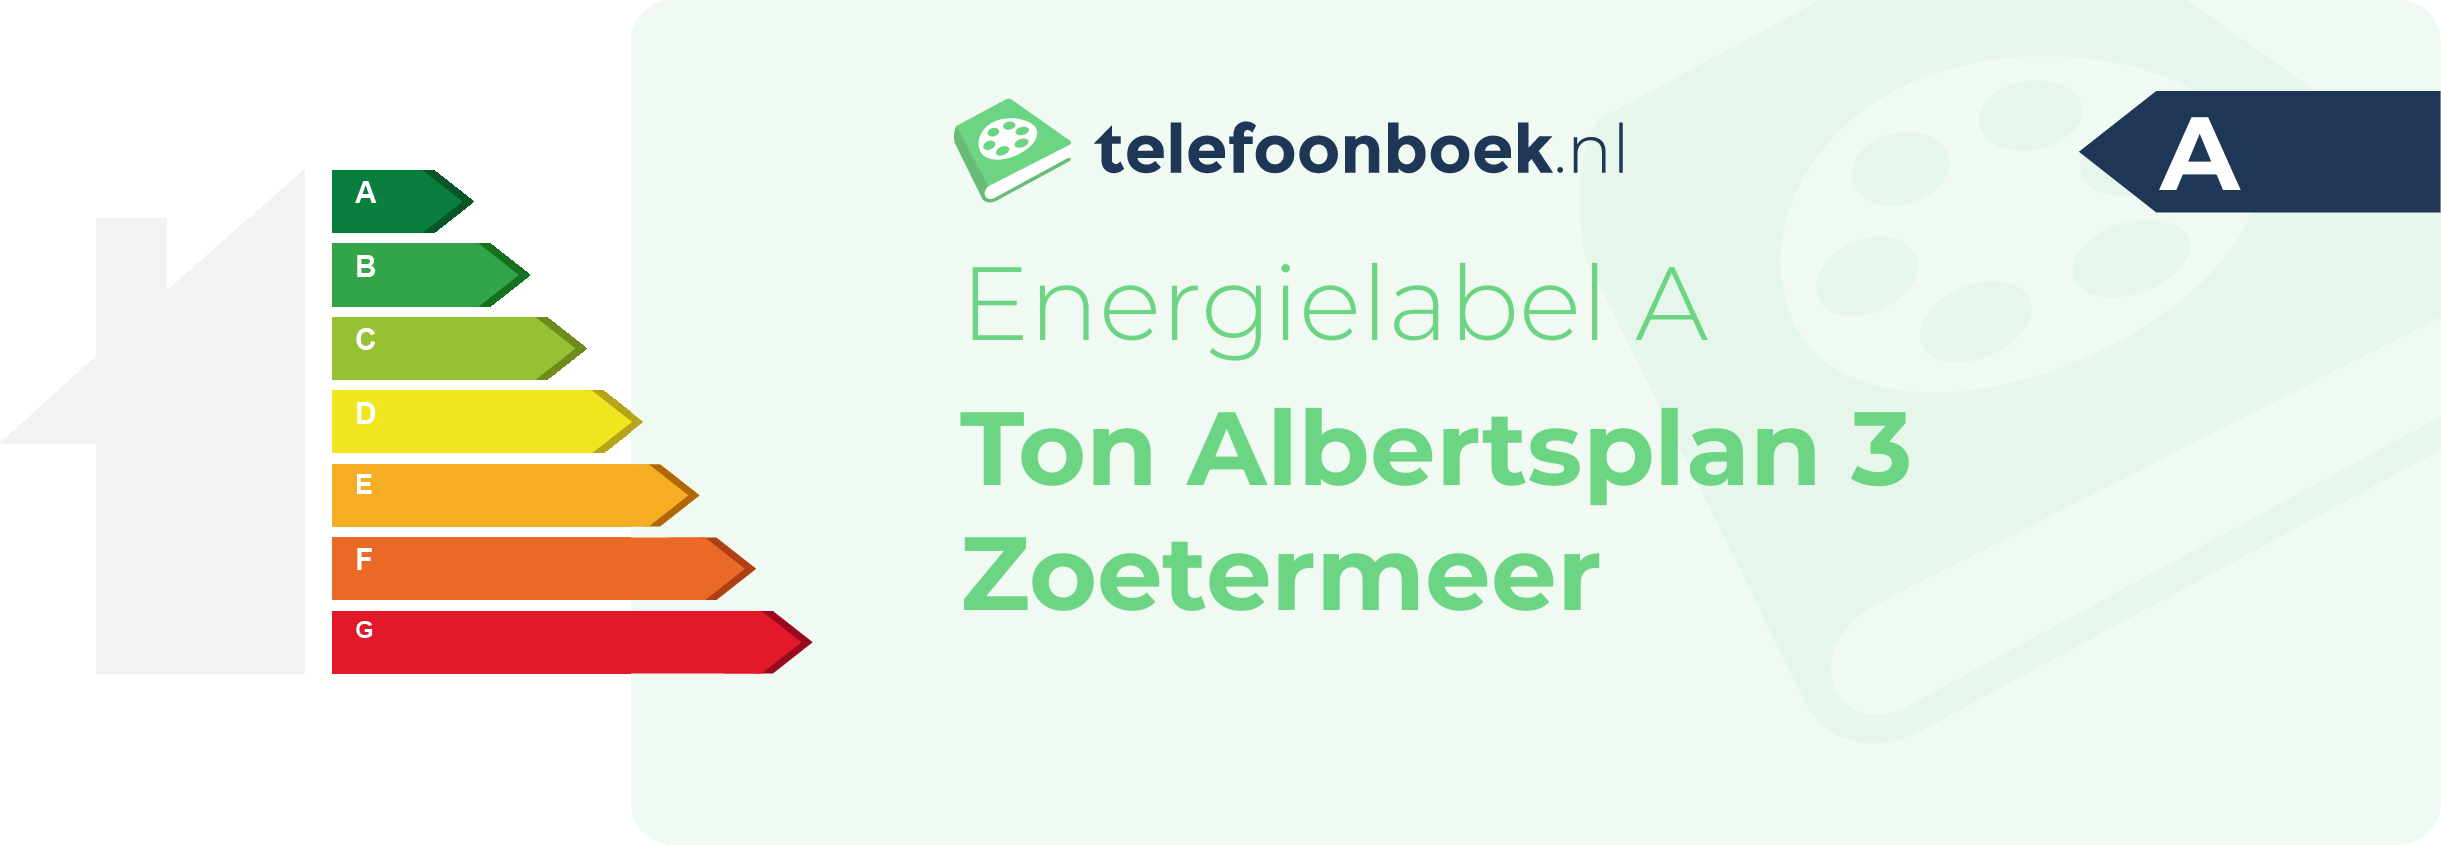 Energielabel Ton Albertsplan 3 Zoetermeer